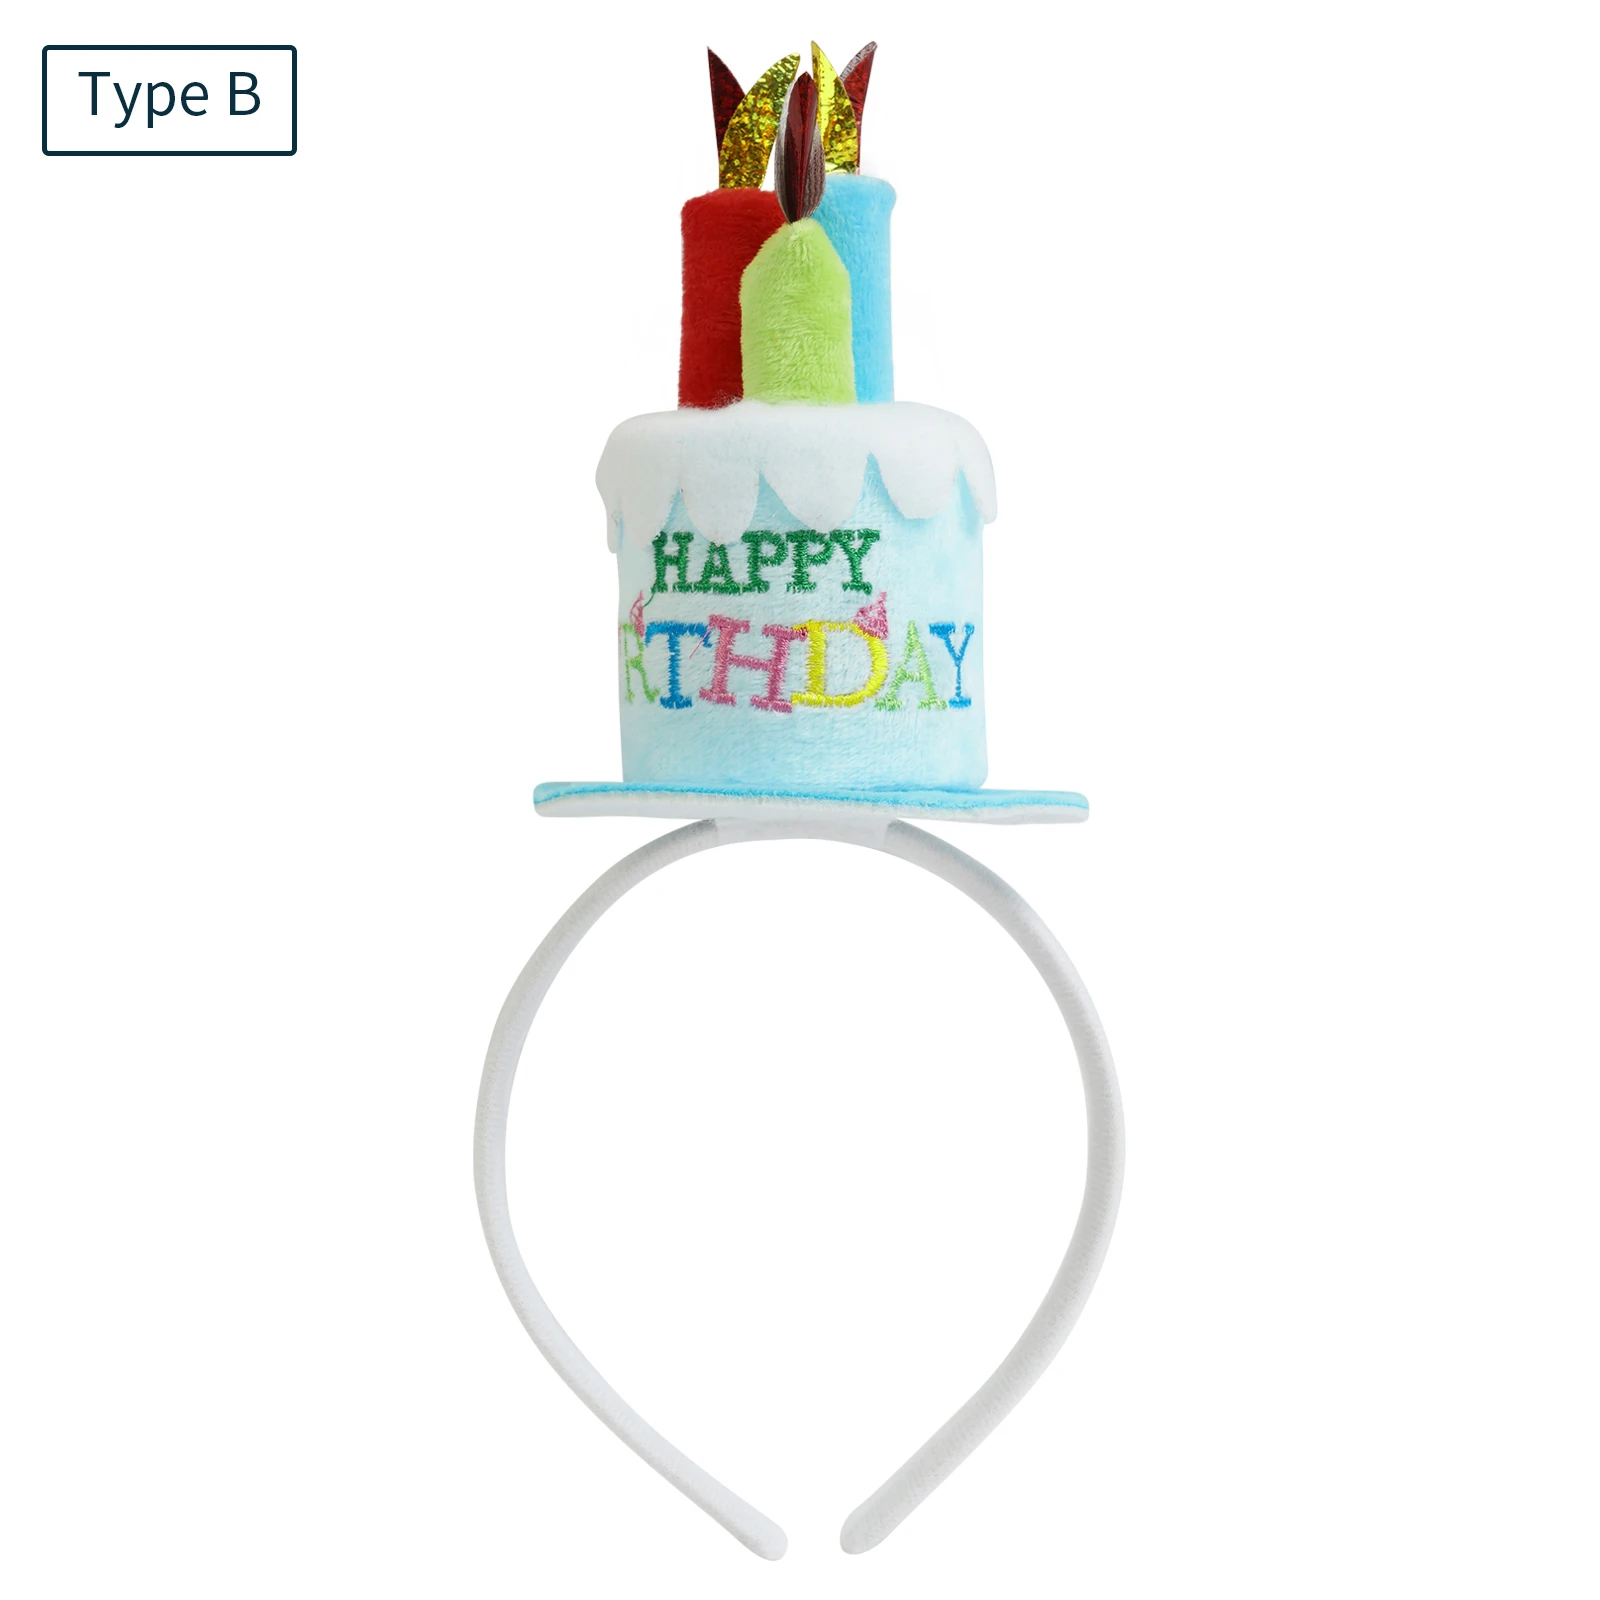 PretendEar Headband Fun Party Costume Celebration Happy Birthday Cake Hat Candle 